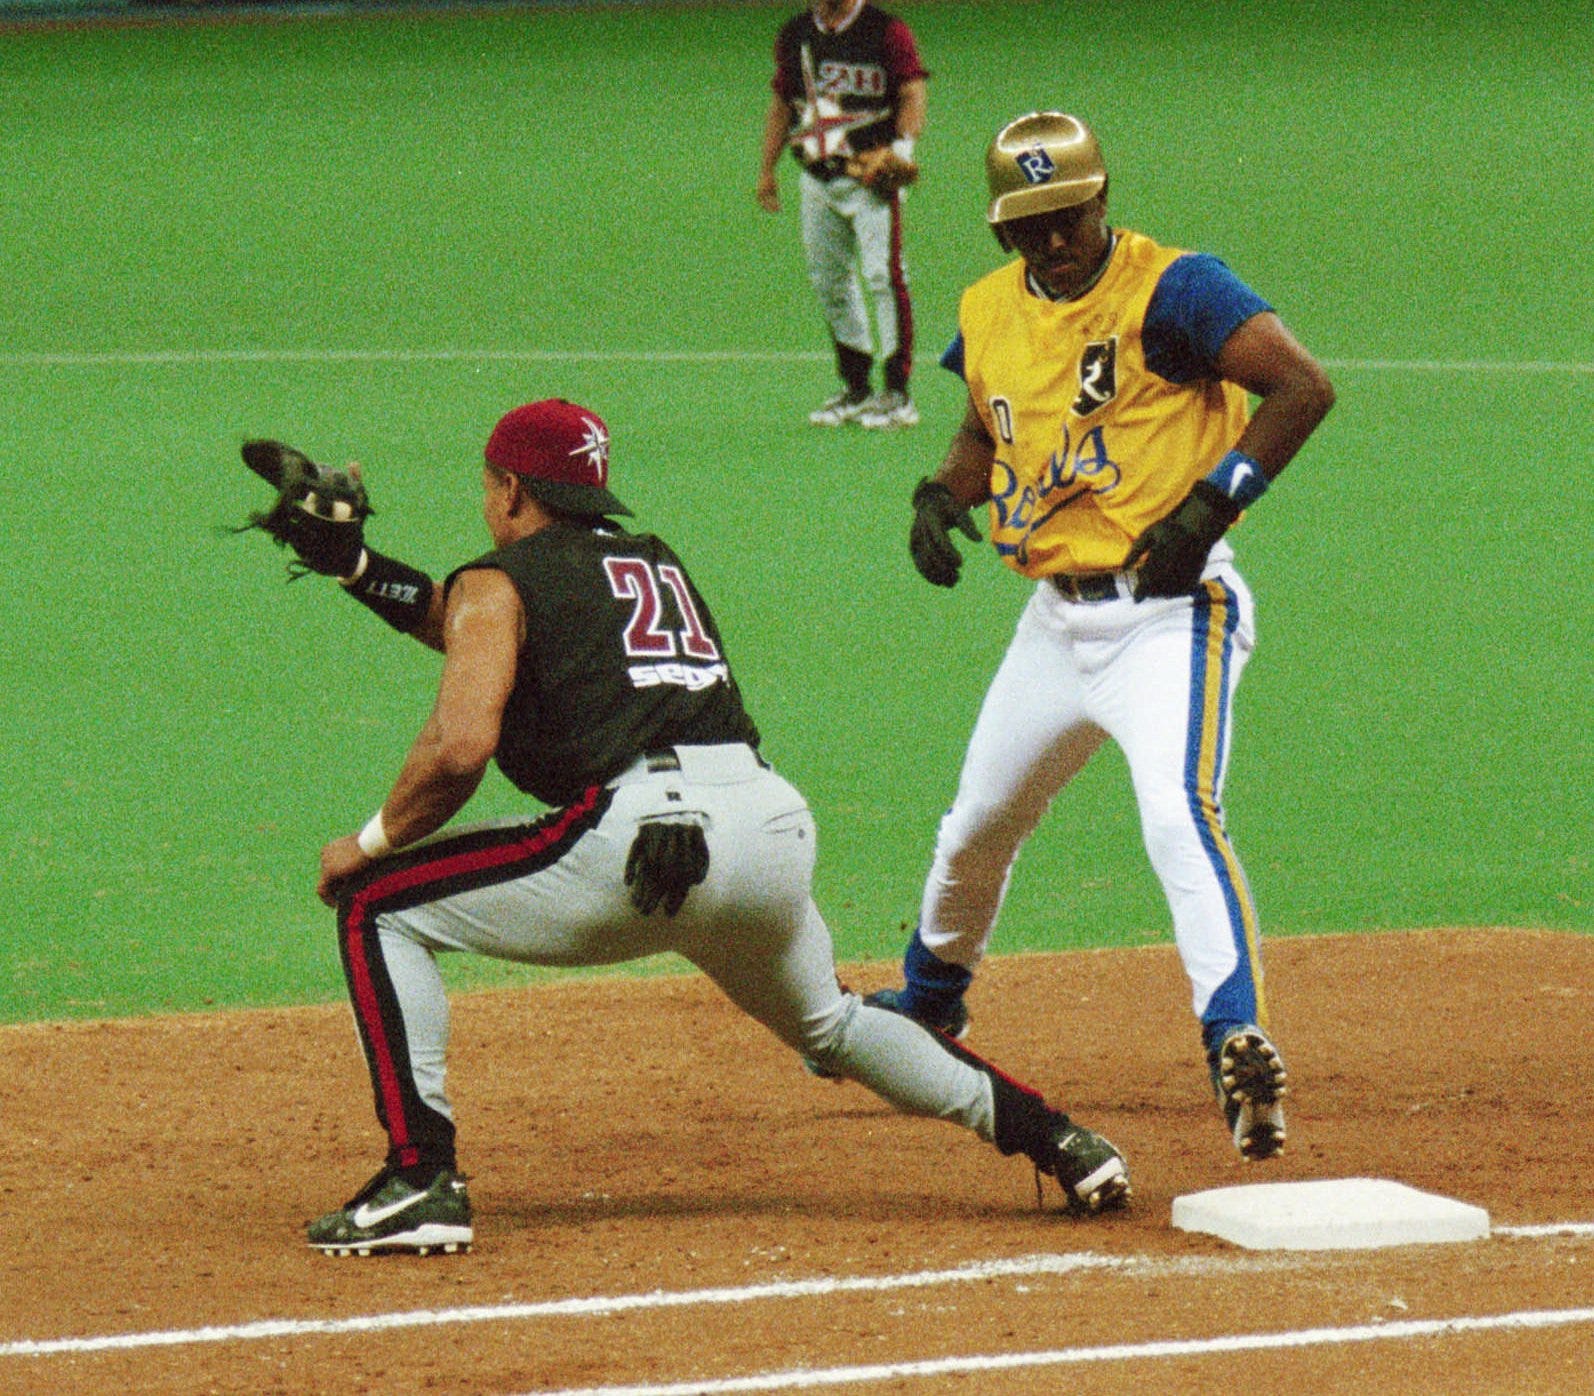 1999 baseball uniforms